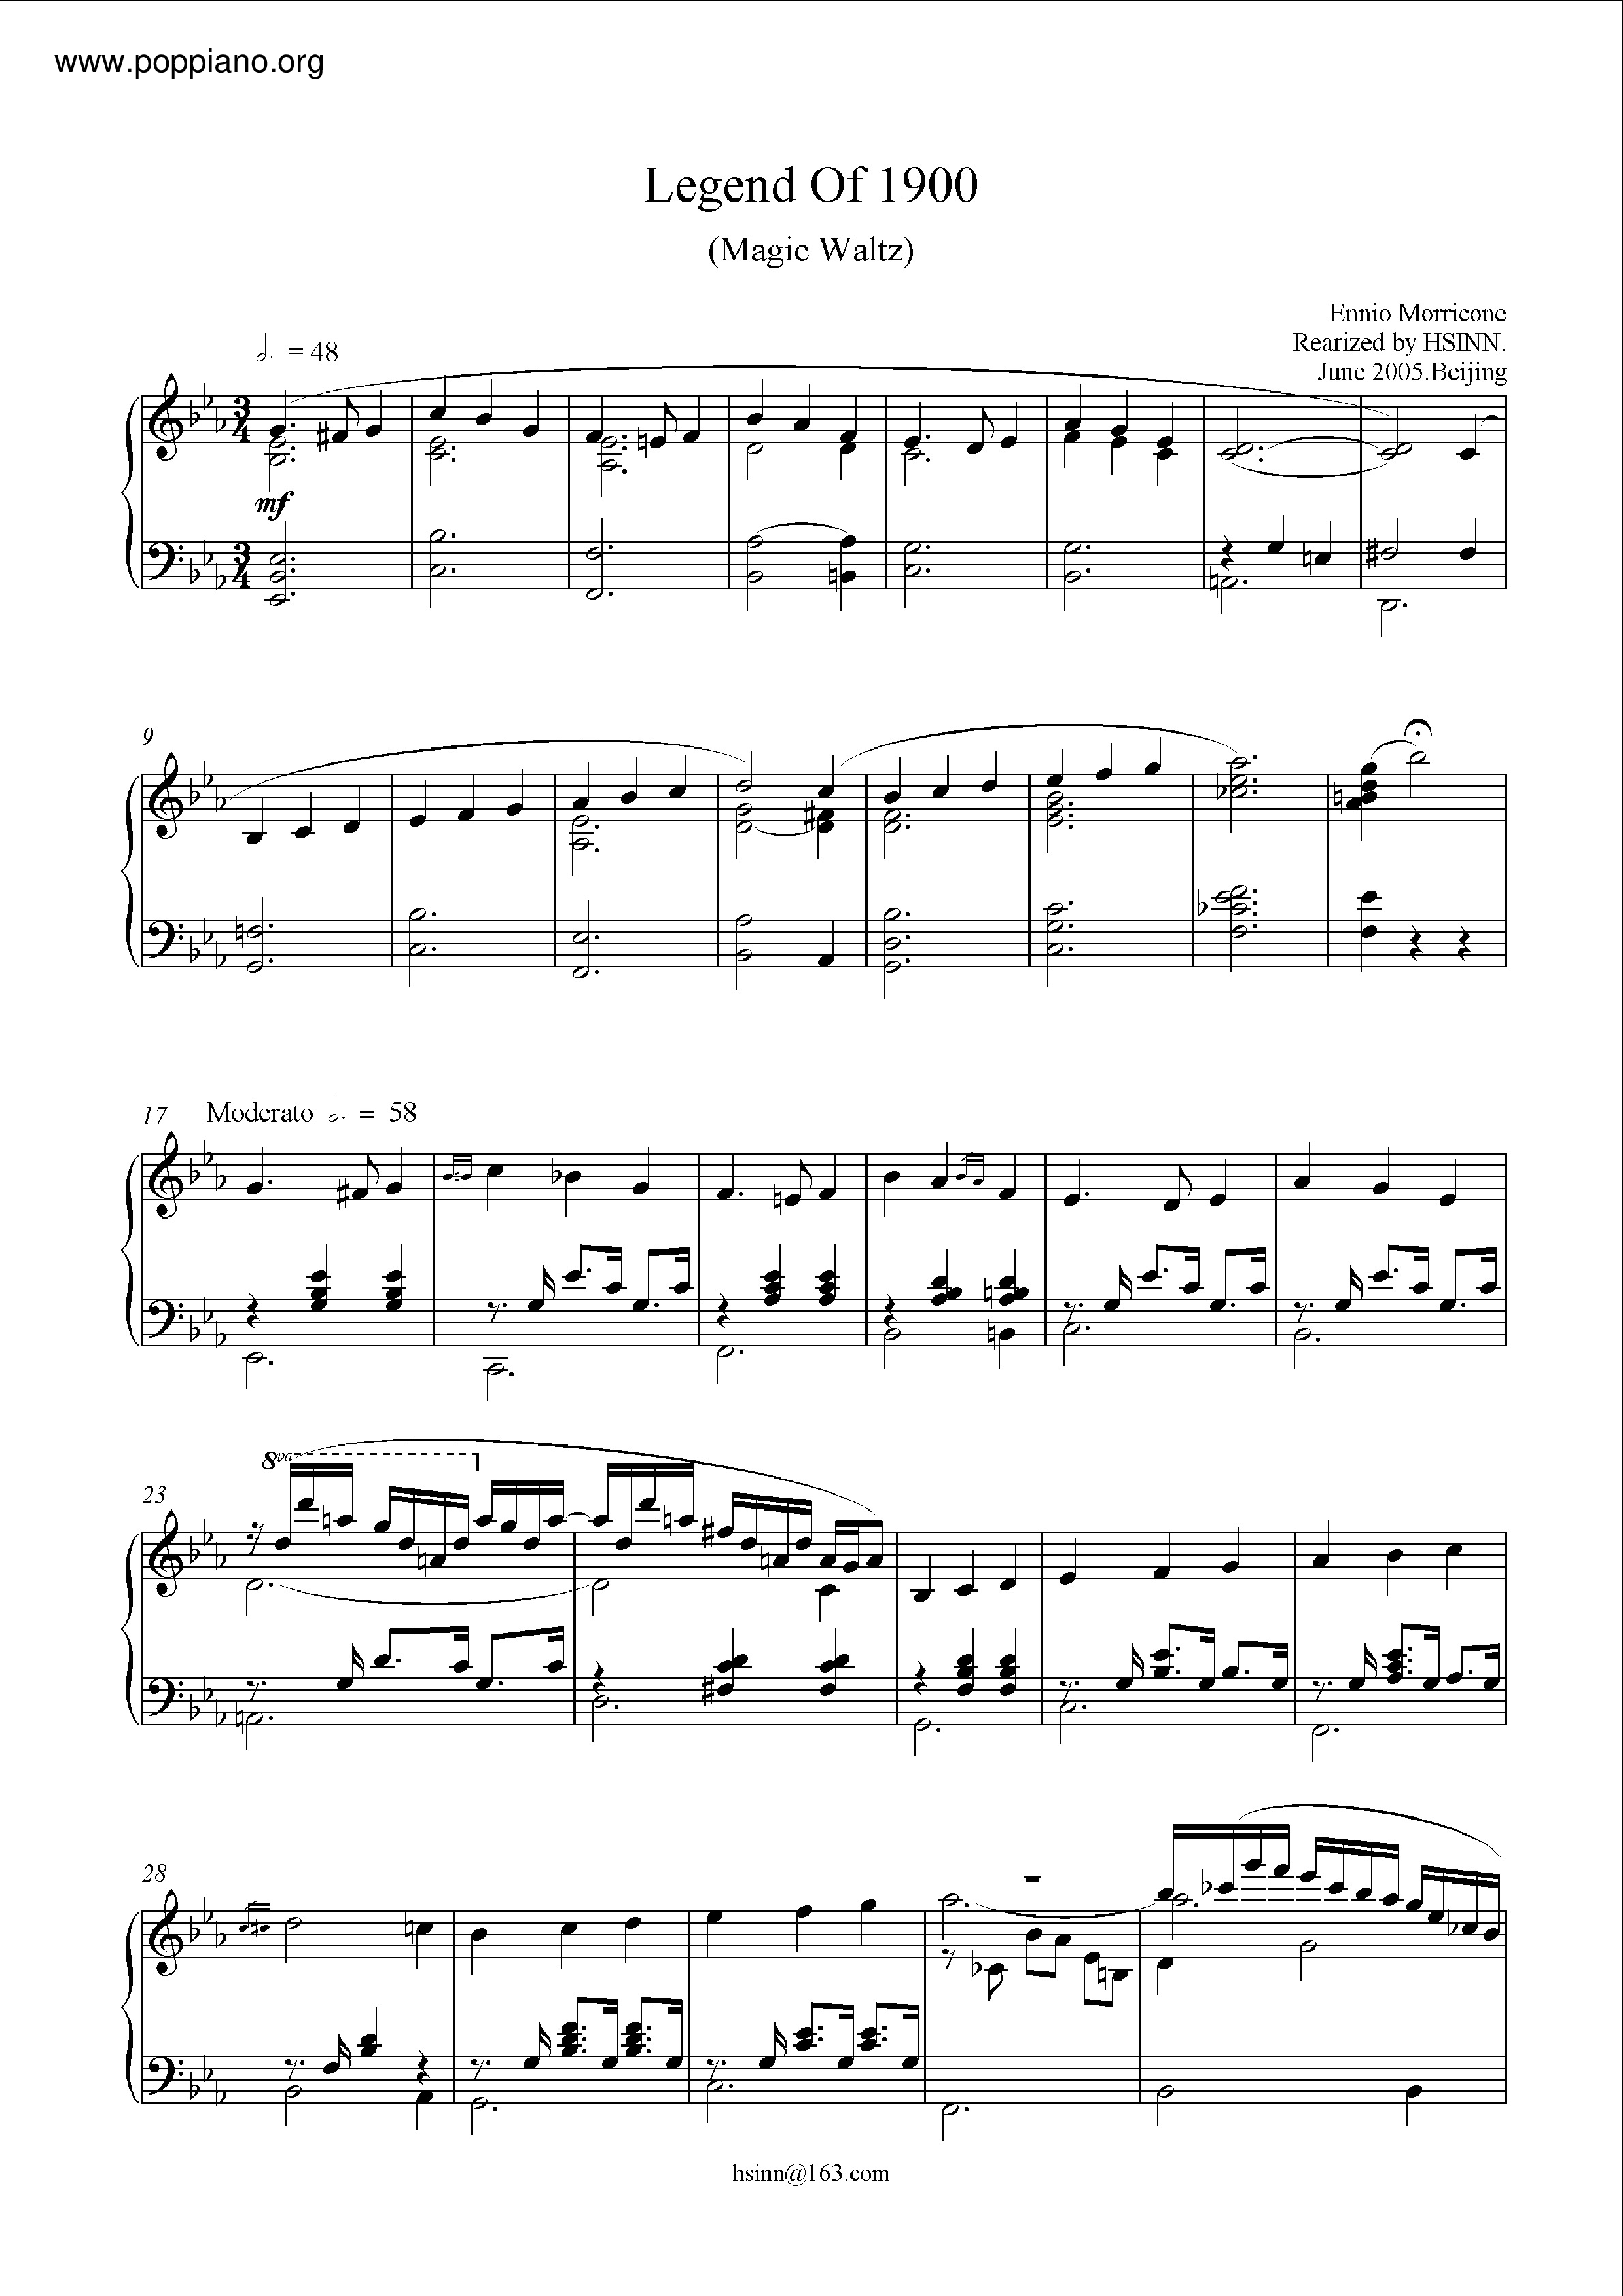 Legend Of 1900 - Magic Waltz Score